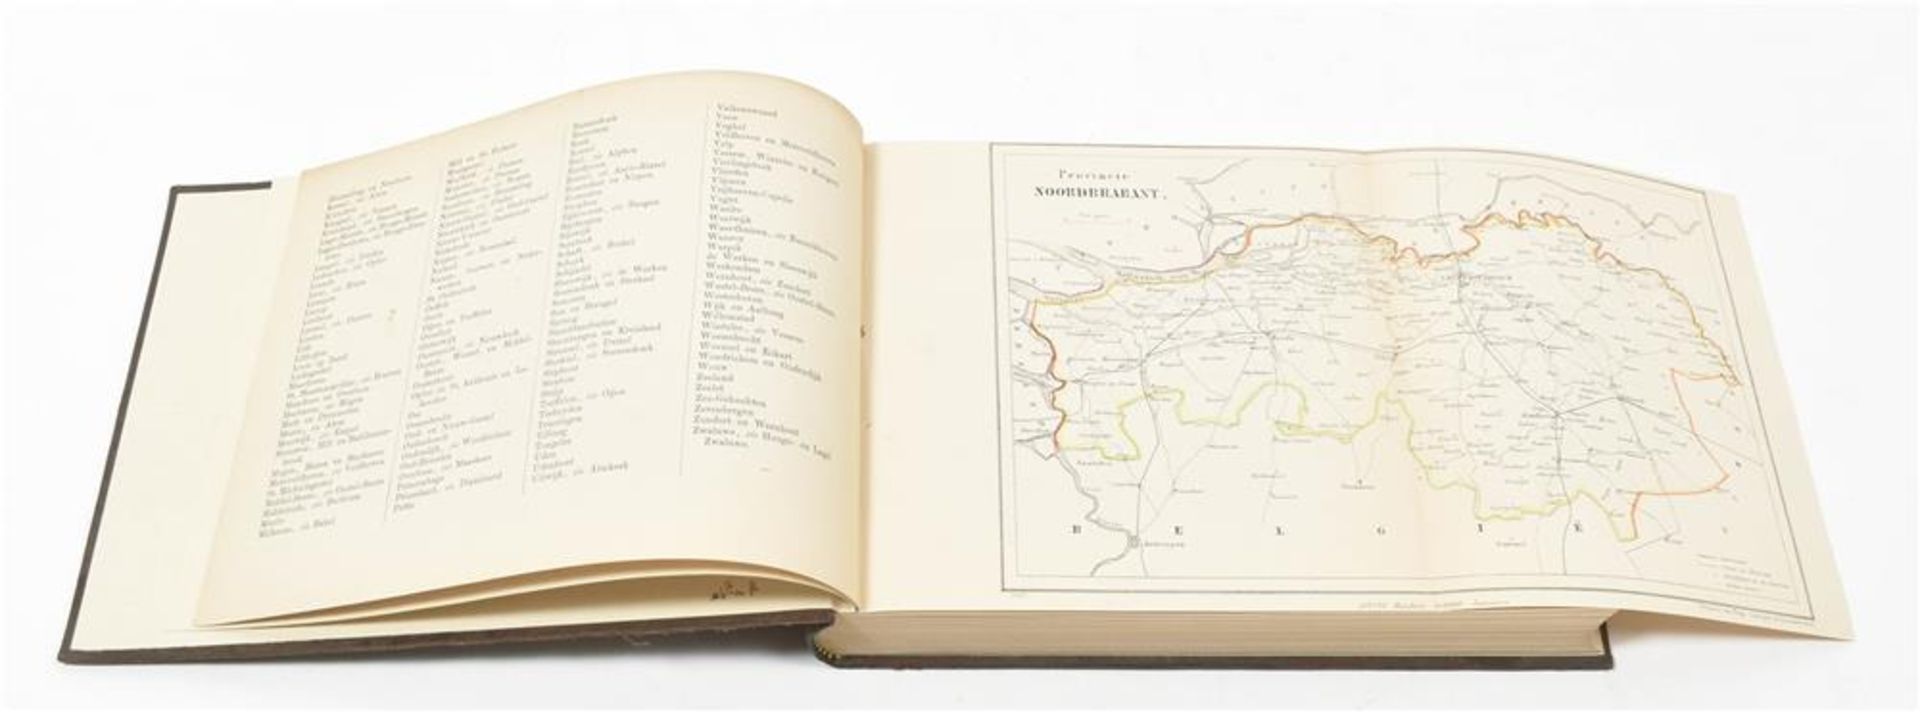 [Brabant] Kuyper, J. Gemeente-atlas van Nederland (...). Eerste deel. Noord-Brabant - Image 3 of 6